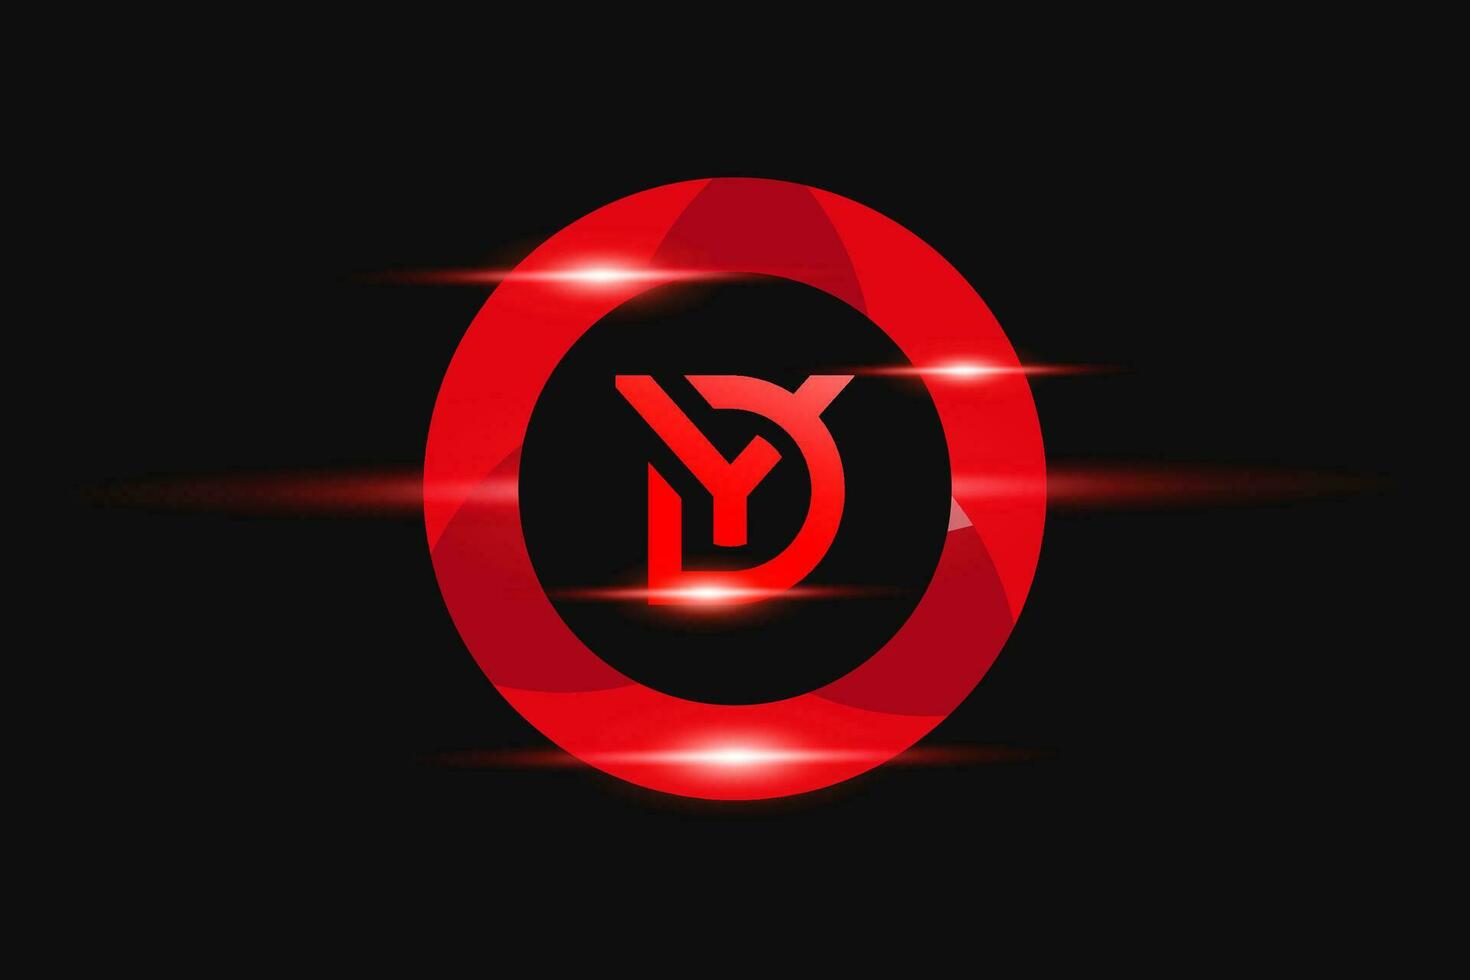 DY Red logo Design. Vector logo design for business.